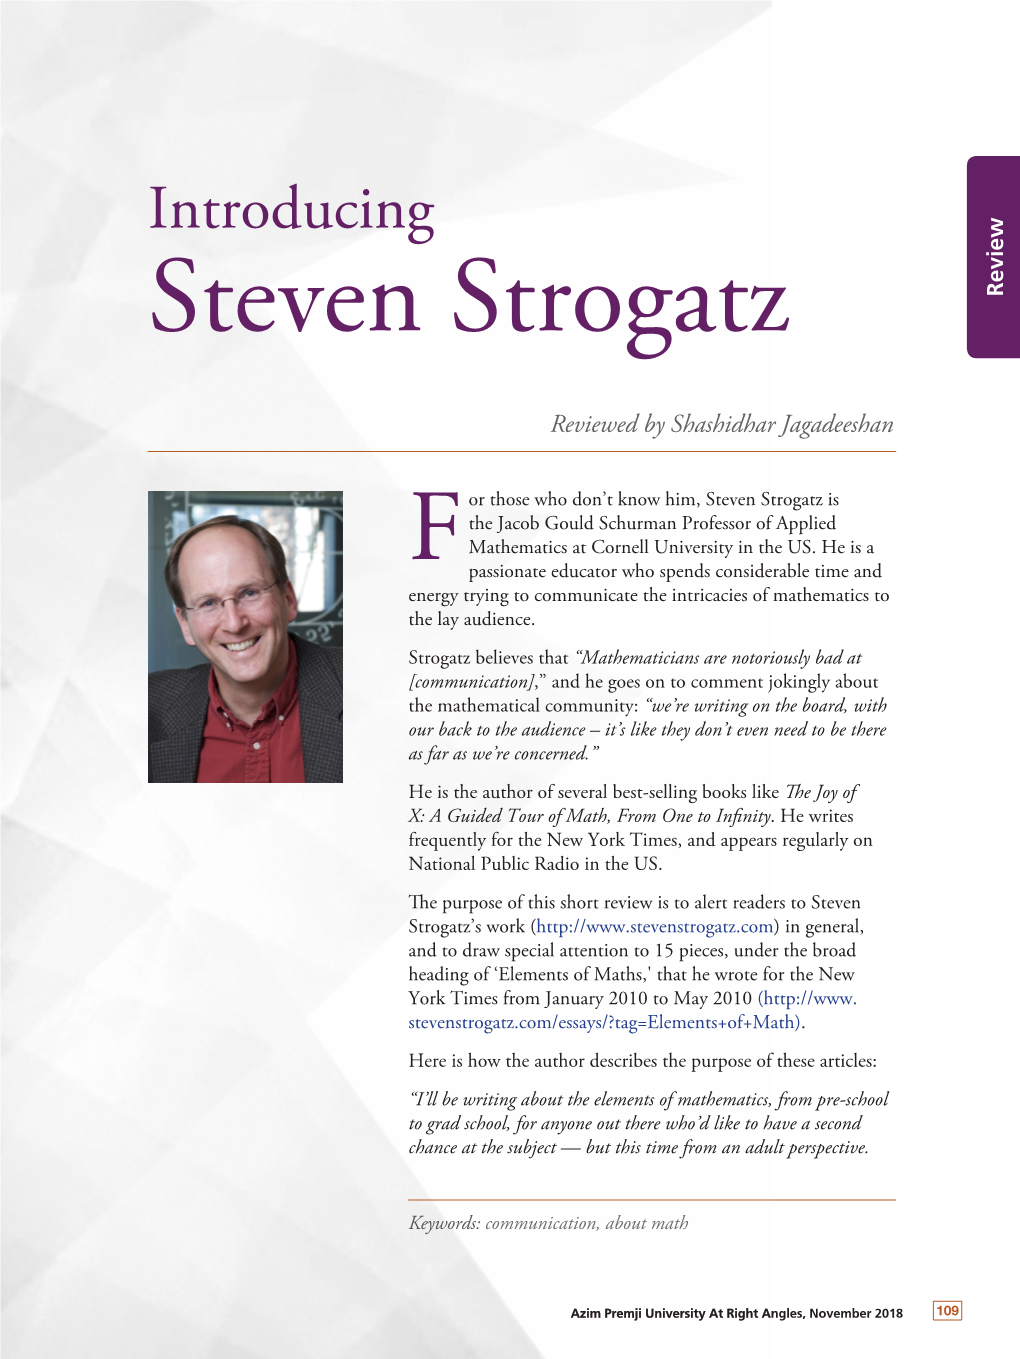 Steven Strogatz Review